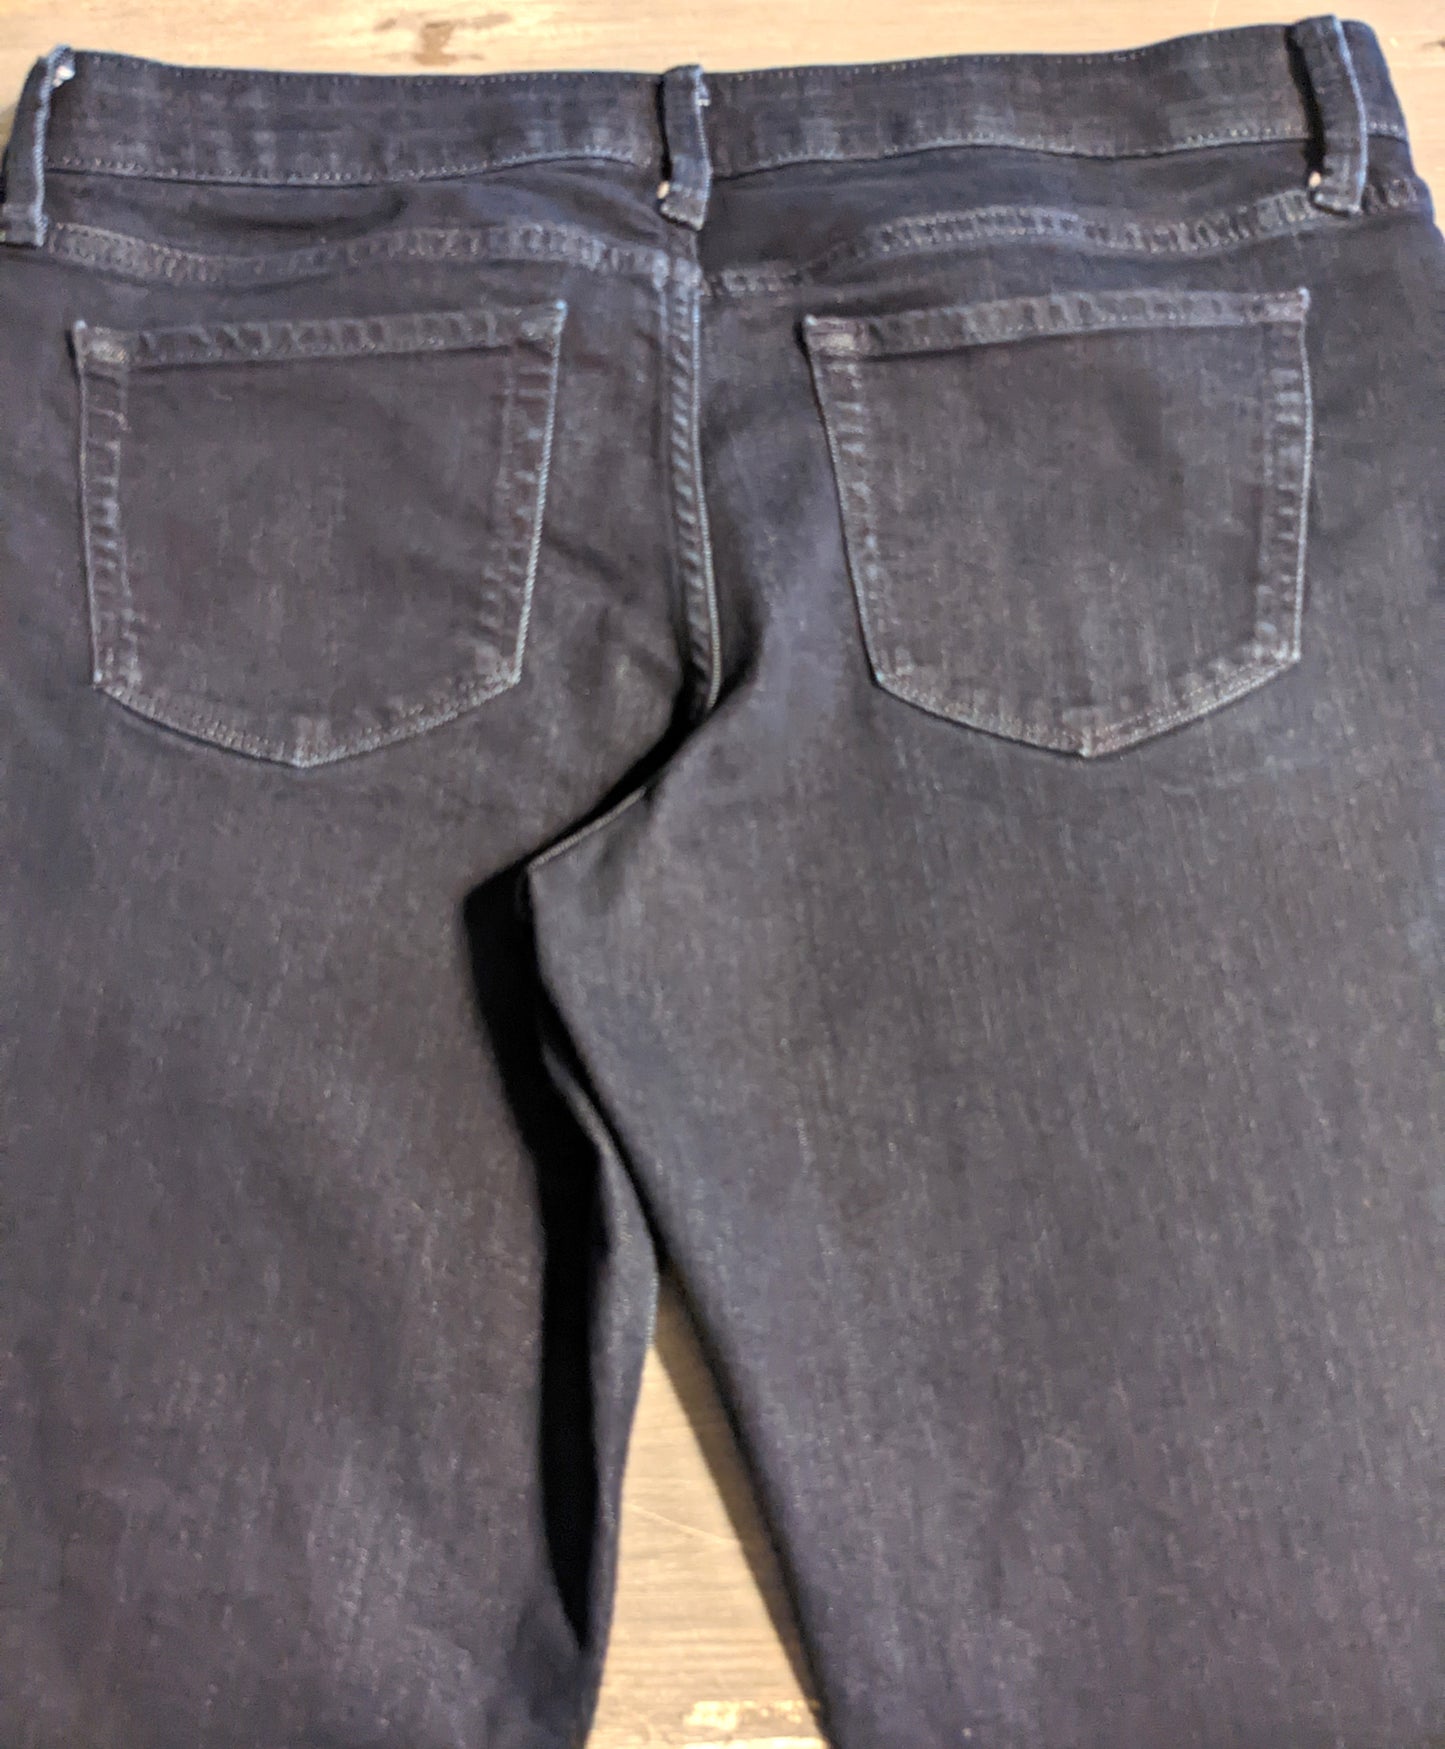 Essential side panels 27" skinny jeans, Multi wash